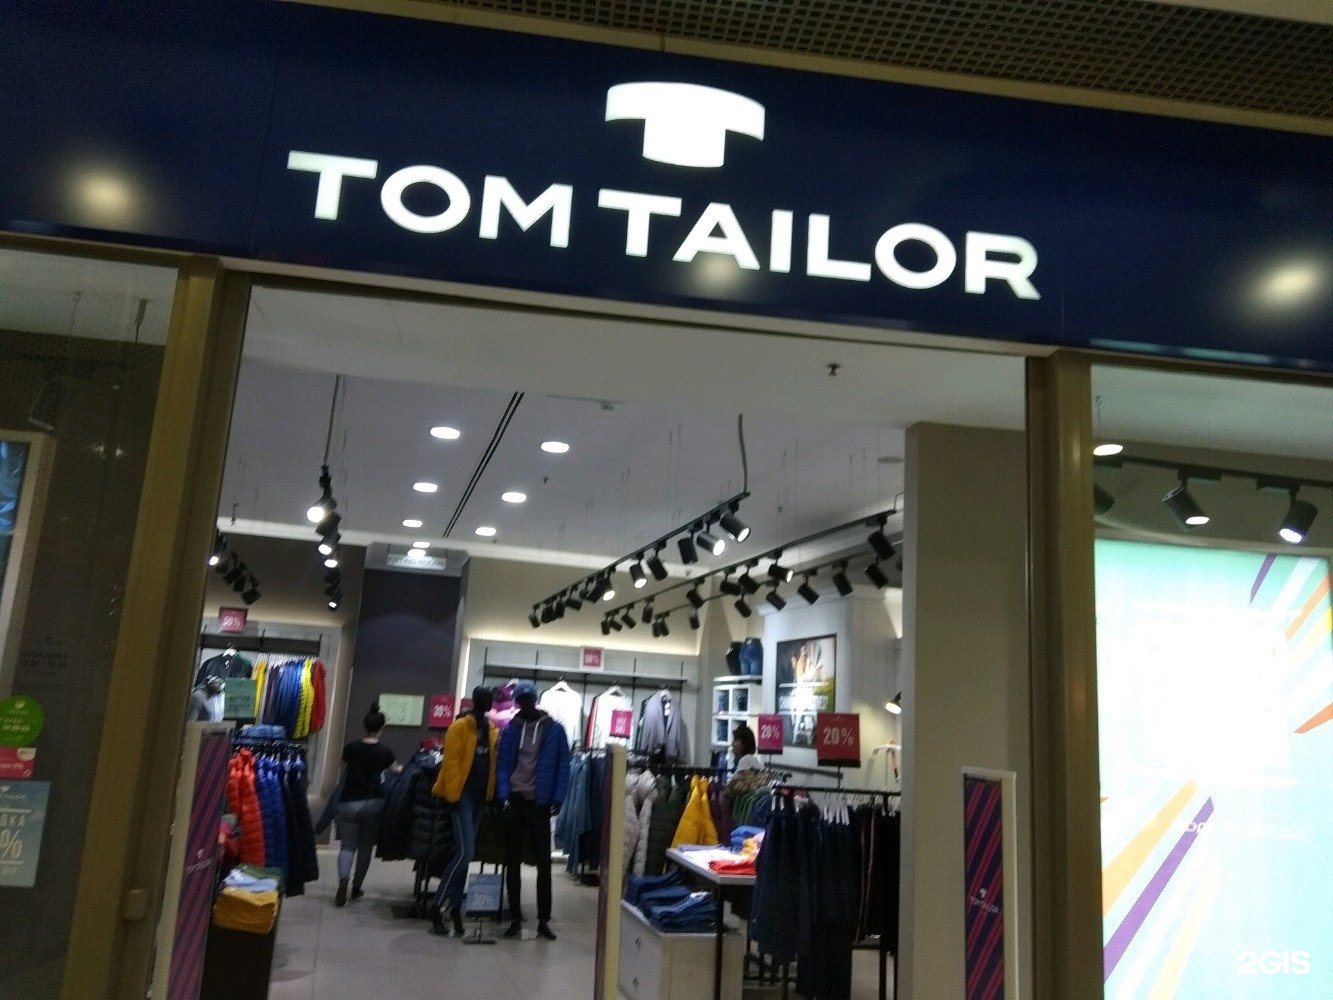 Сайт магазина том тейлор. Tom Tailor Store. Tom Tailor Астрахань. Tom Tailor магазины в СПБ. Магазин одежды ярмарка Астрахань.